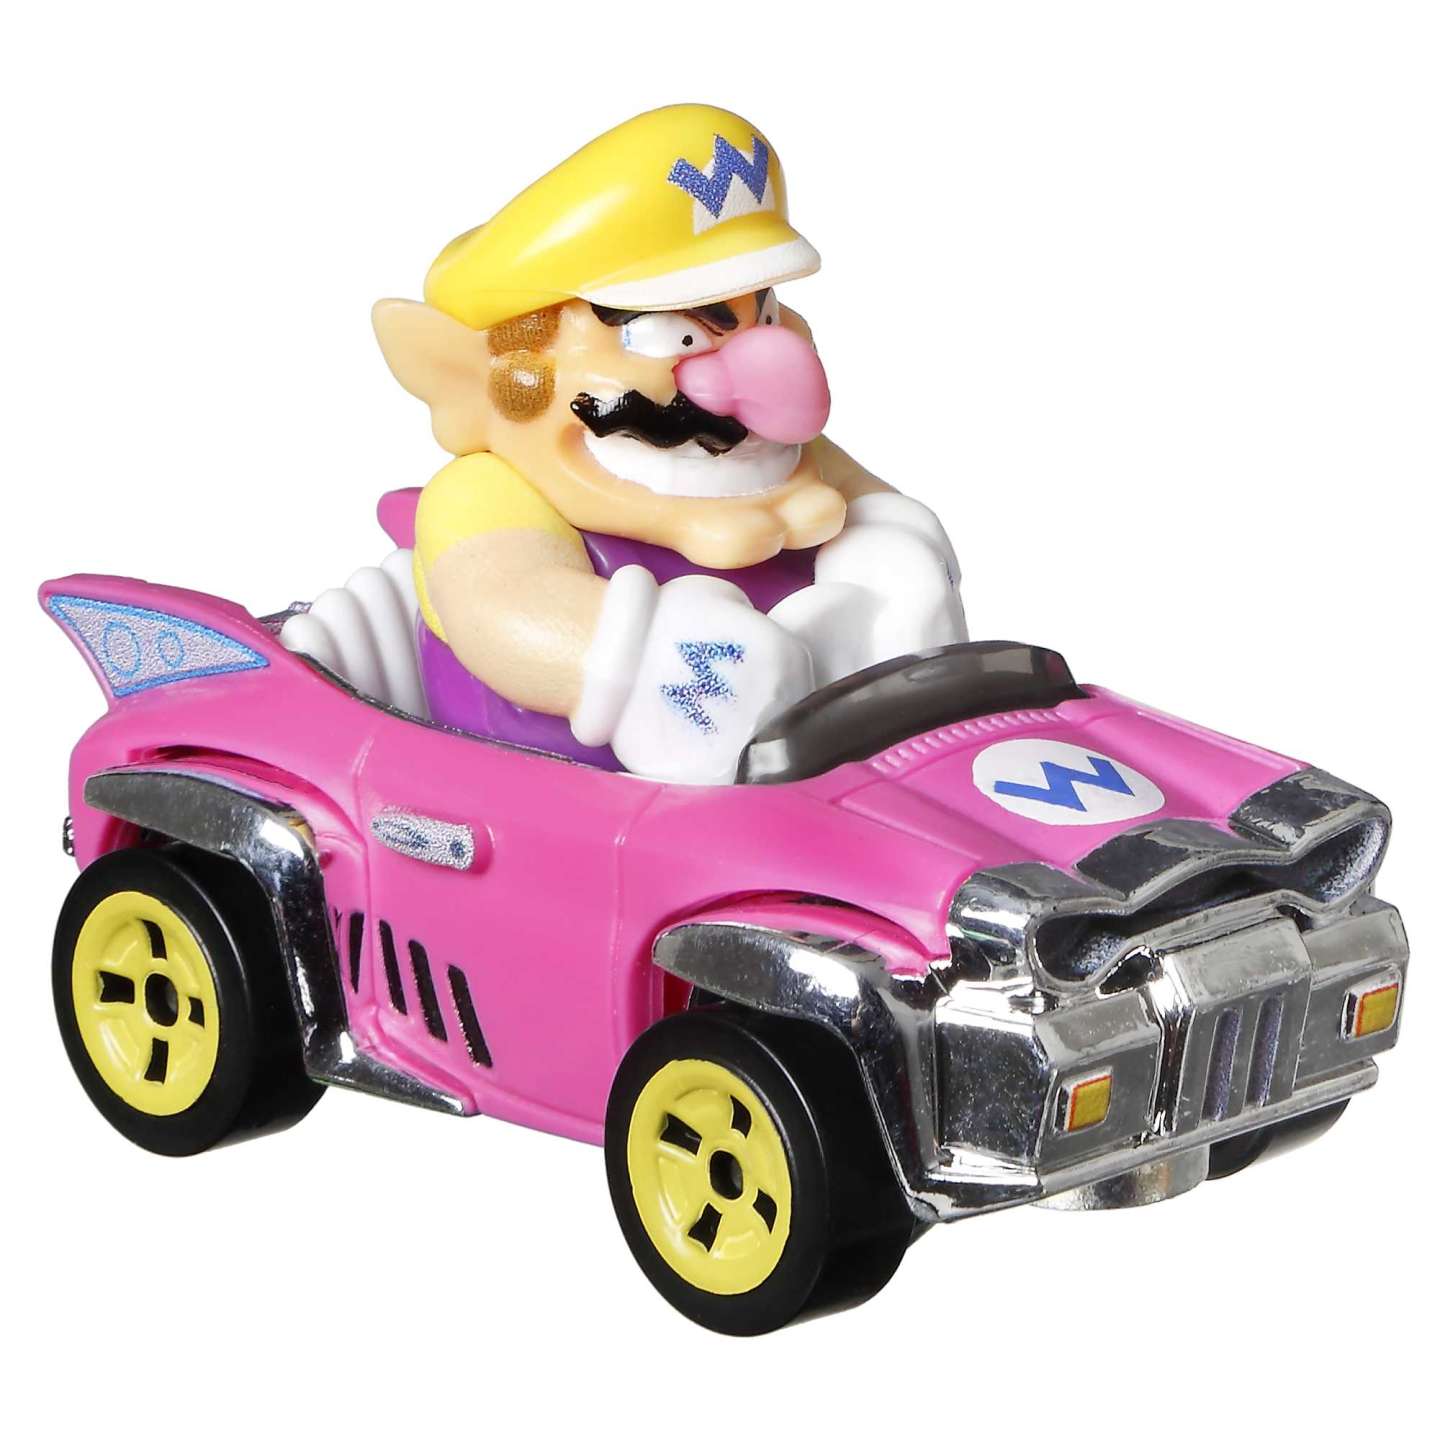 Hot Wheels: Hot Wheels Mario Kart Personajes 1:64 Sorpresa